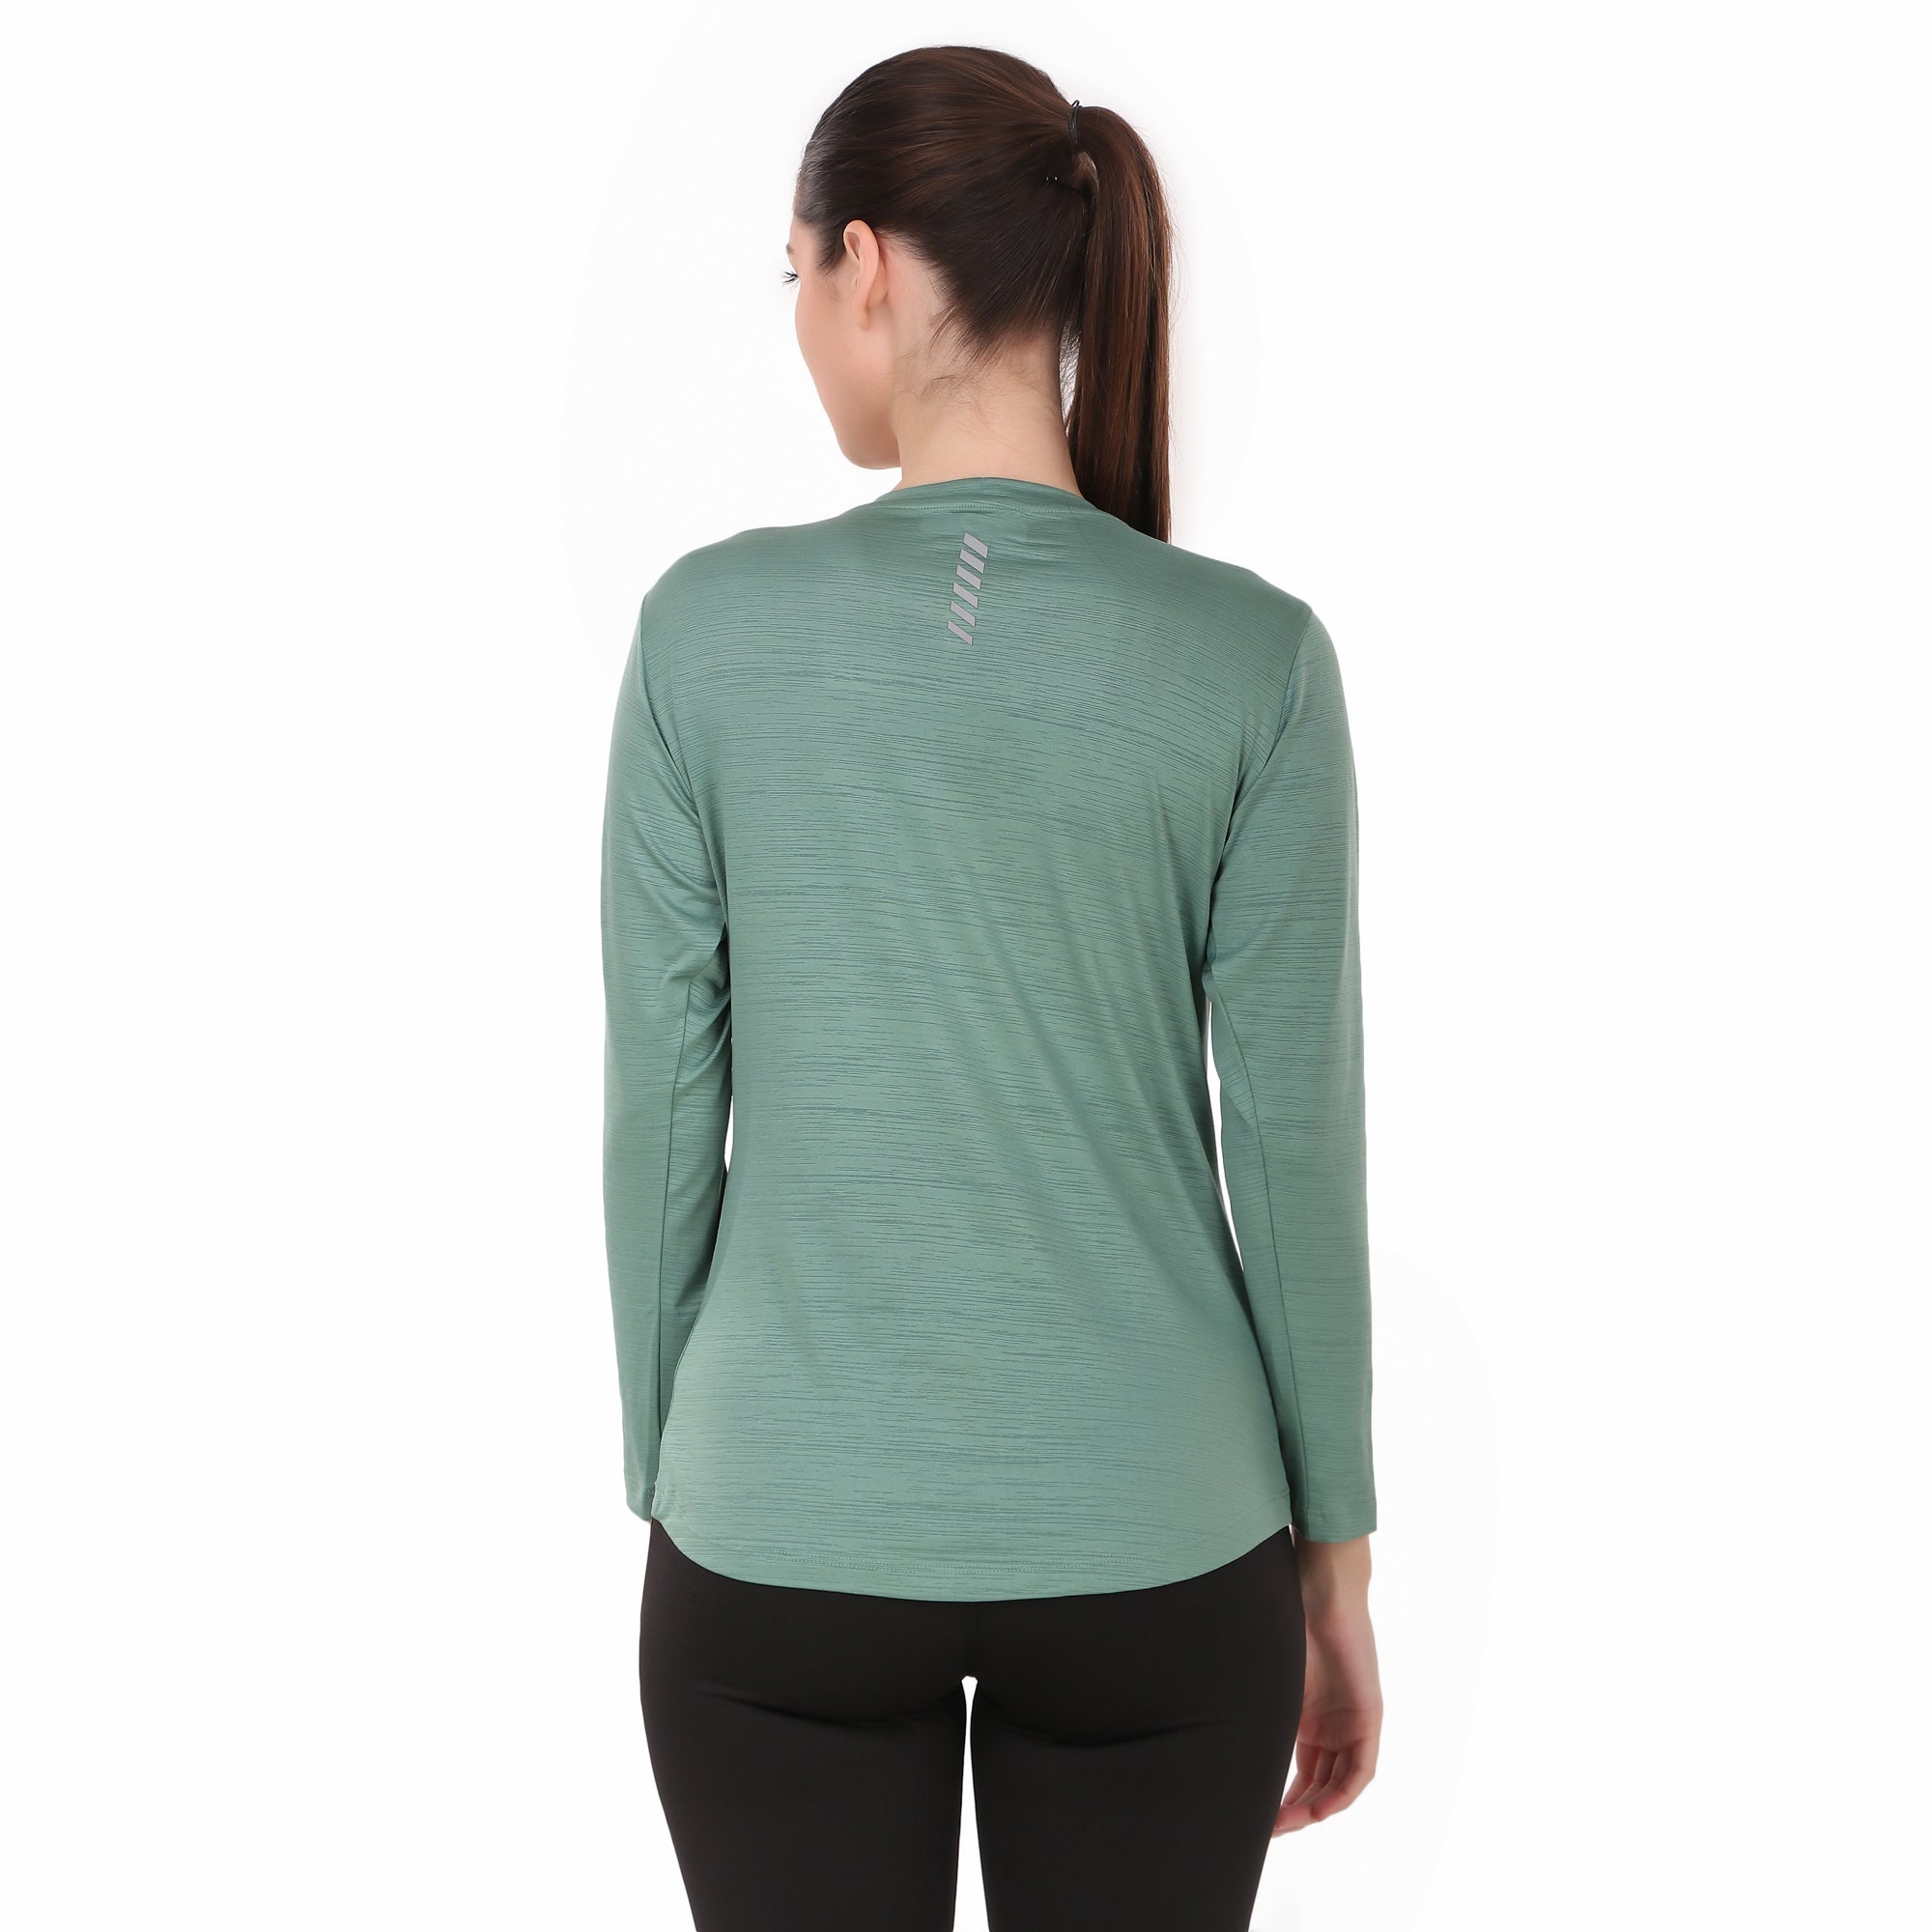 Performance Self Design Tshirt For Women FS (Pastel Green)